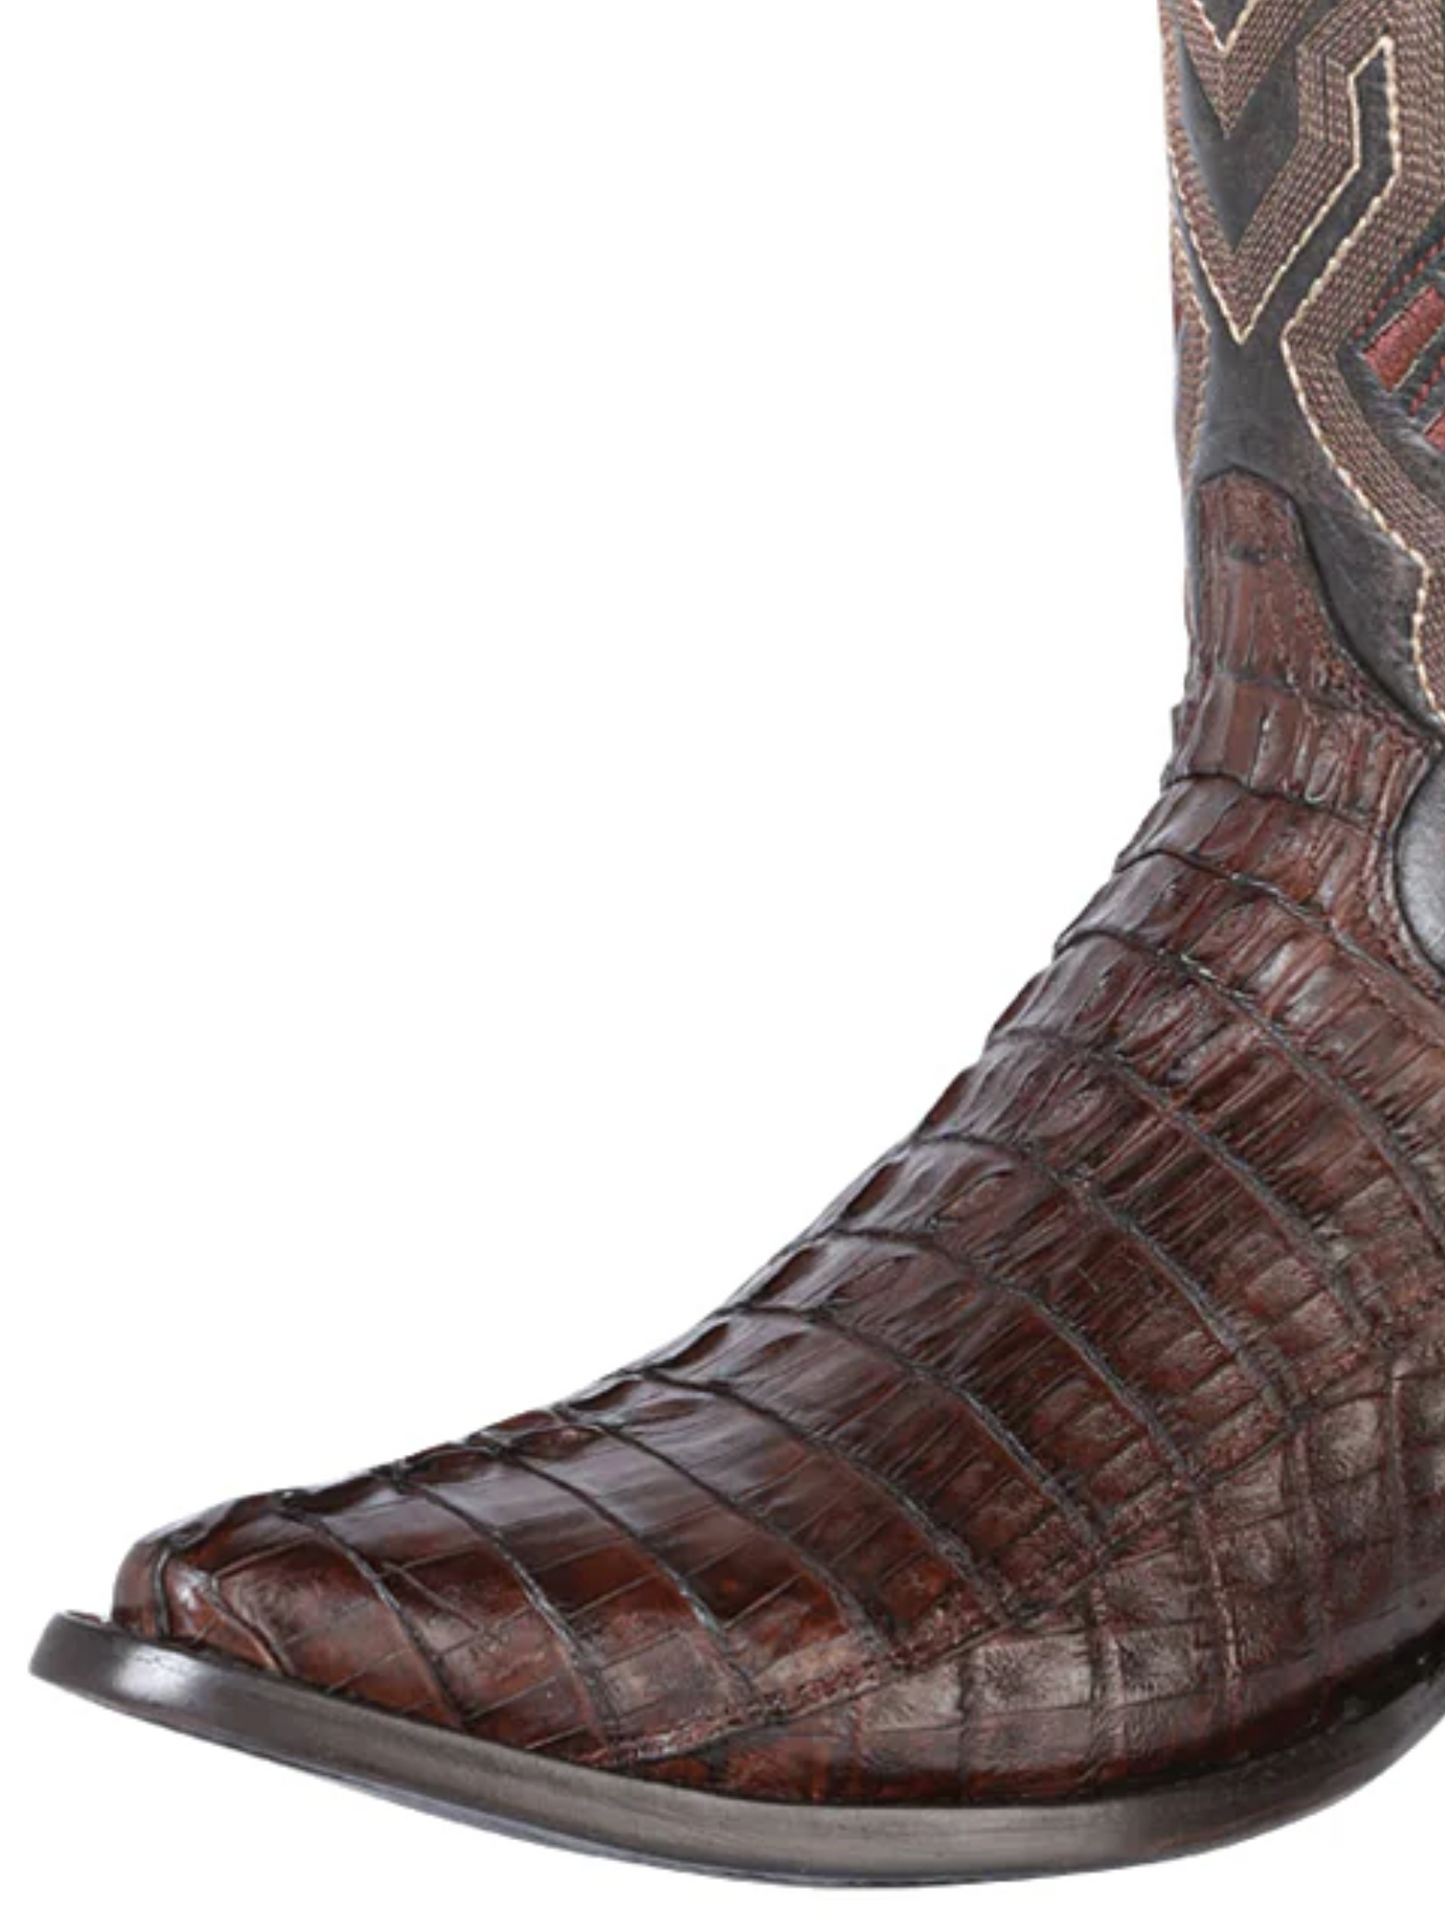 Exotic Caiman Cola Original Cowboy Boots for Men 'Centenario' - ID: 124466